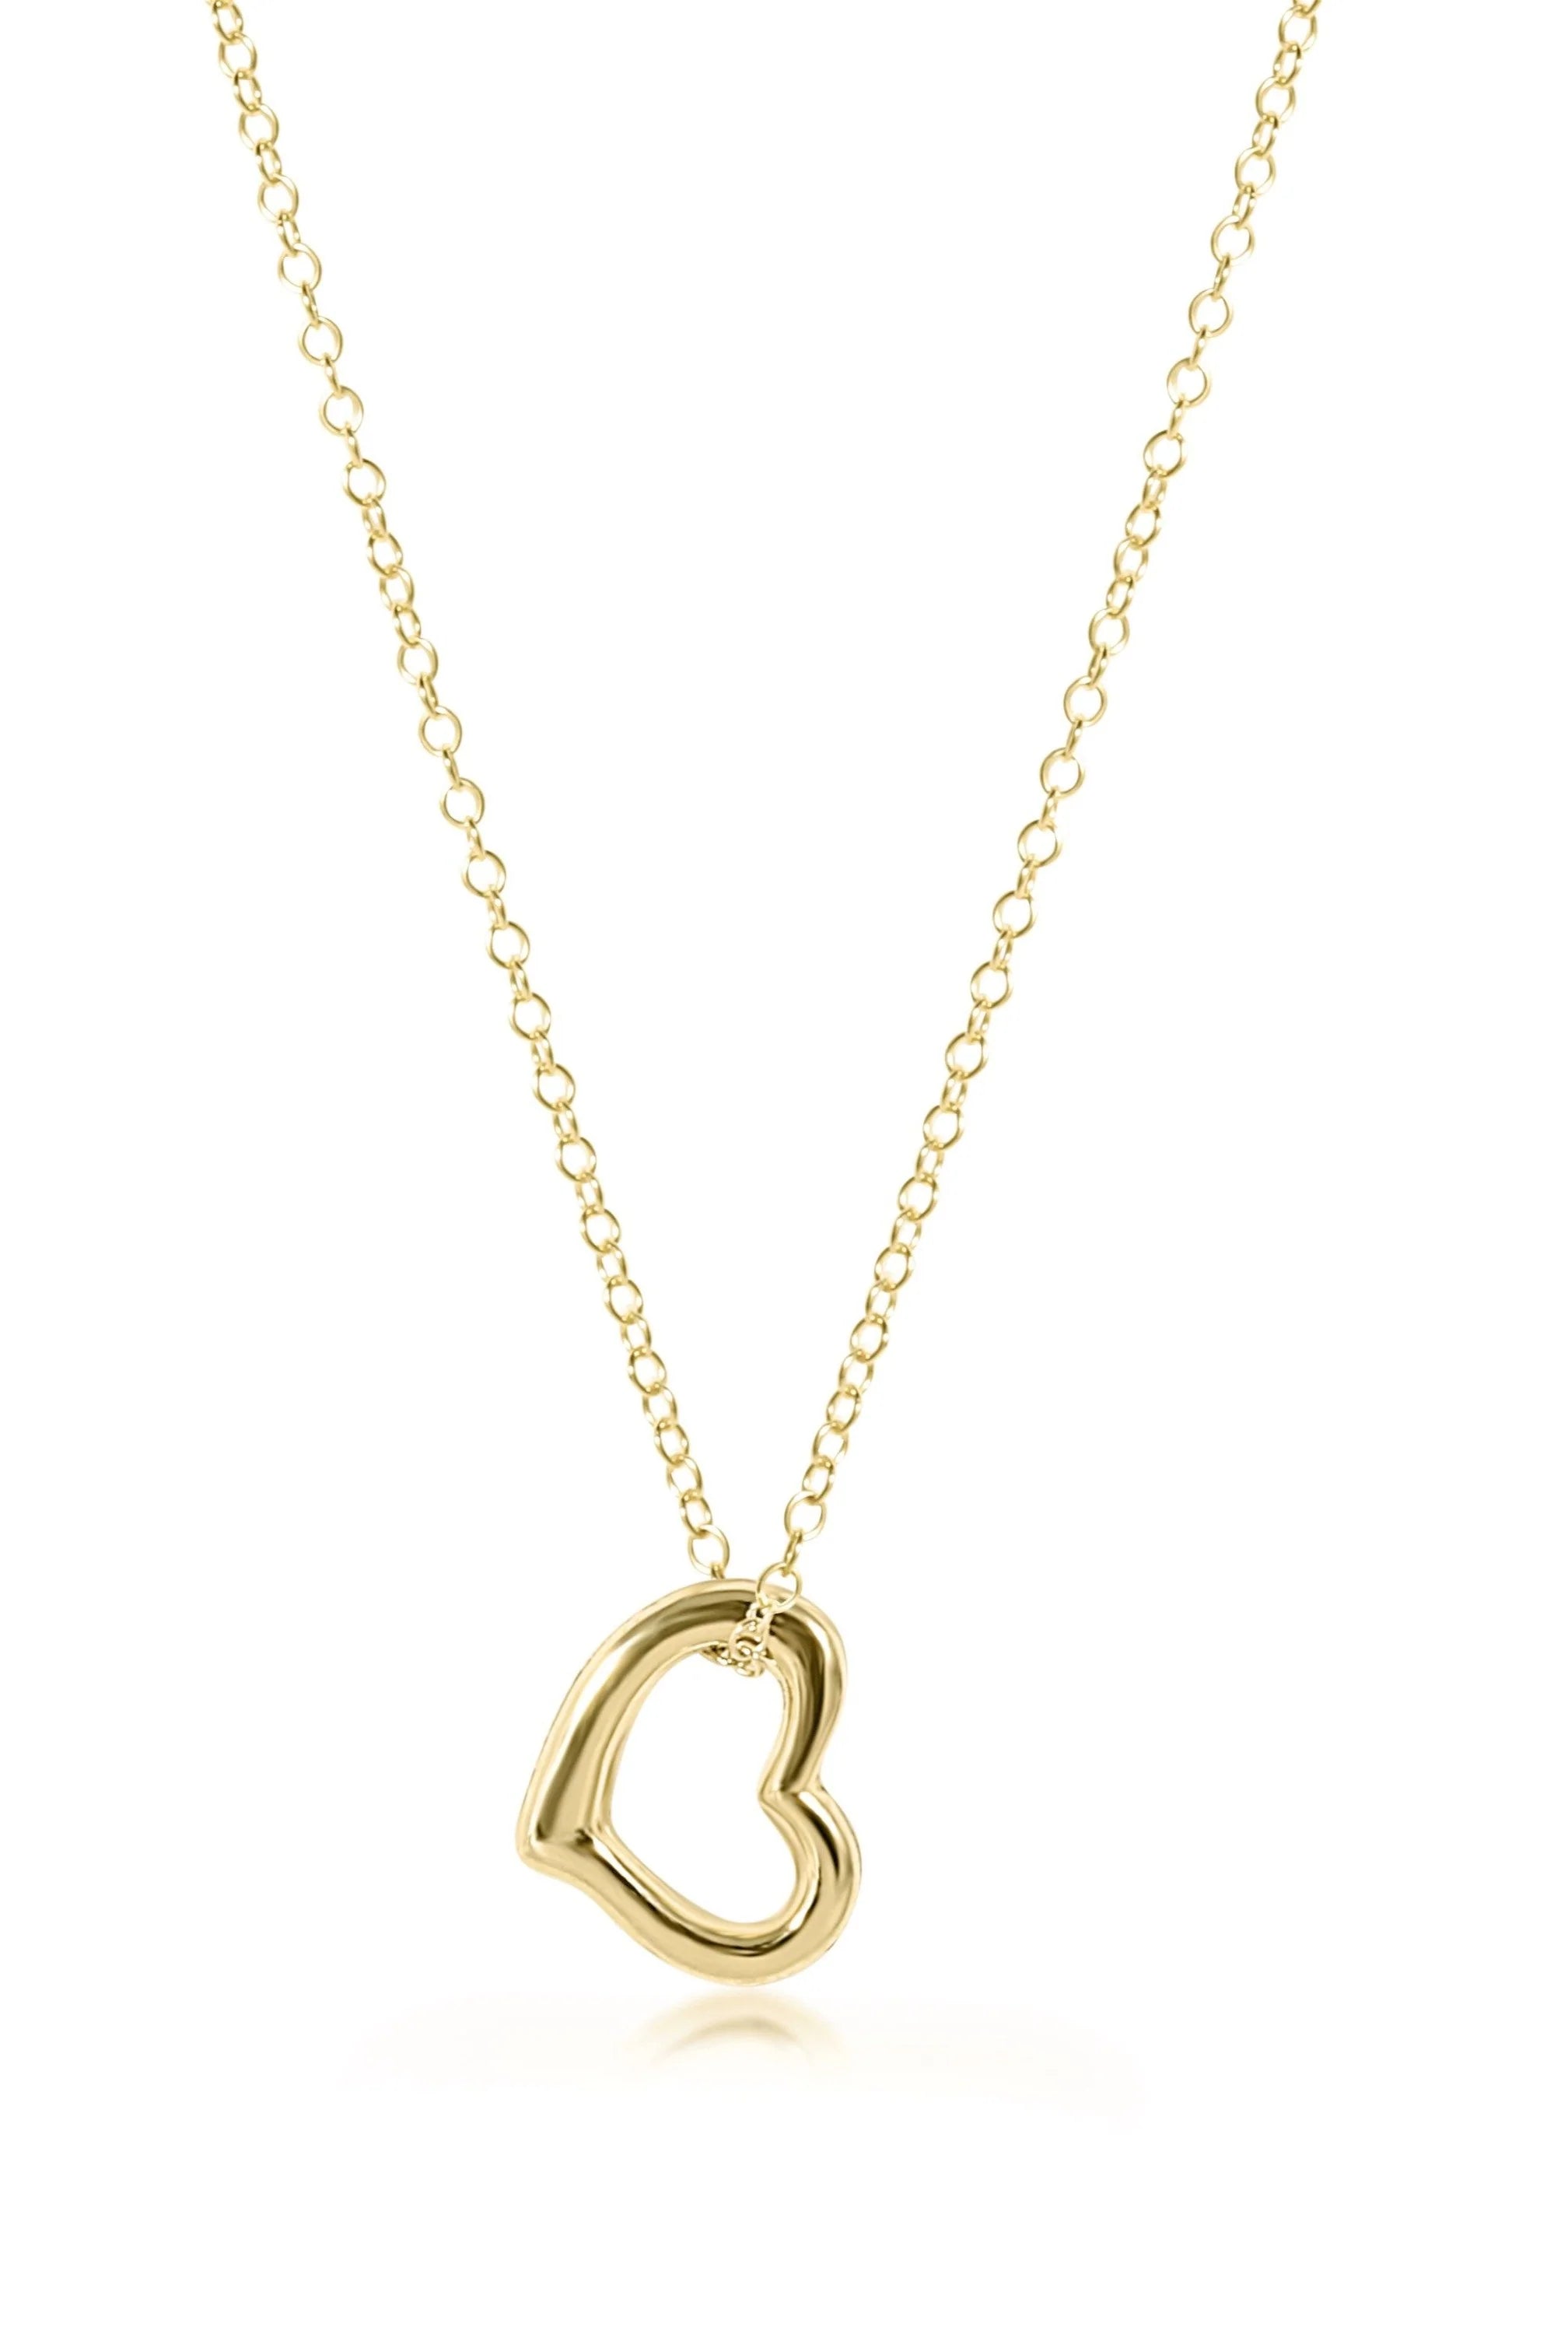 Egirl 14’ Gold Heart Charm Necklace-Necklaces-eNewton-The Lovely Closet, Women's Fashion Boutique in Alexandria, KY